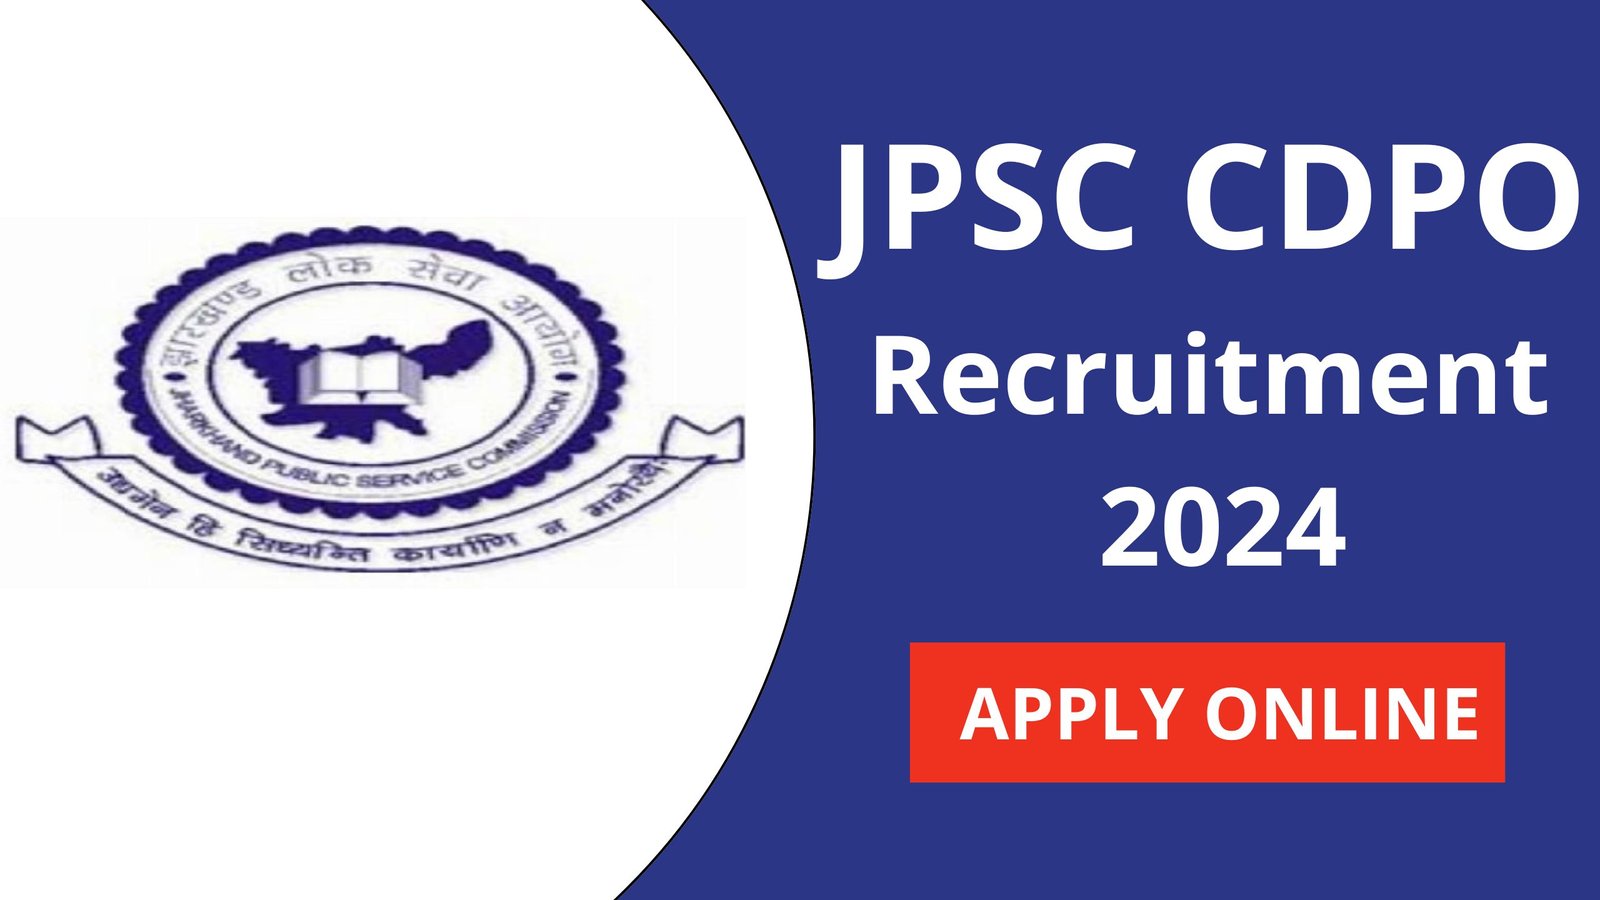 JPSC CDPO Recruitment 2024